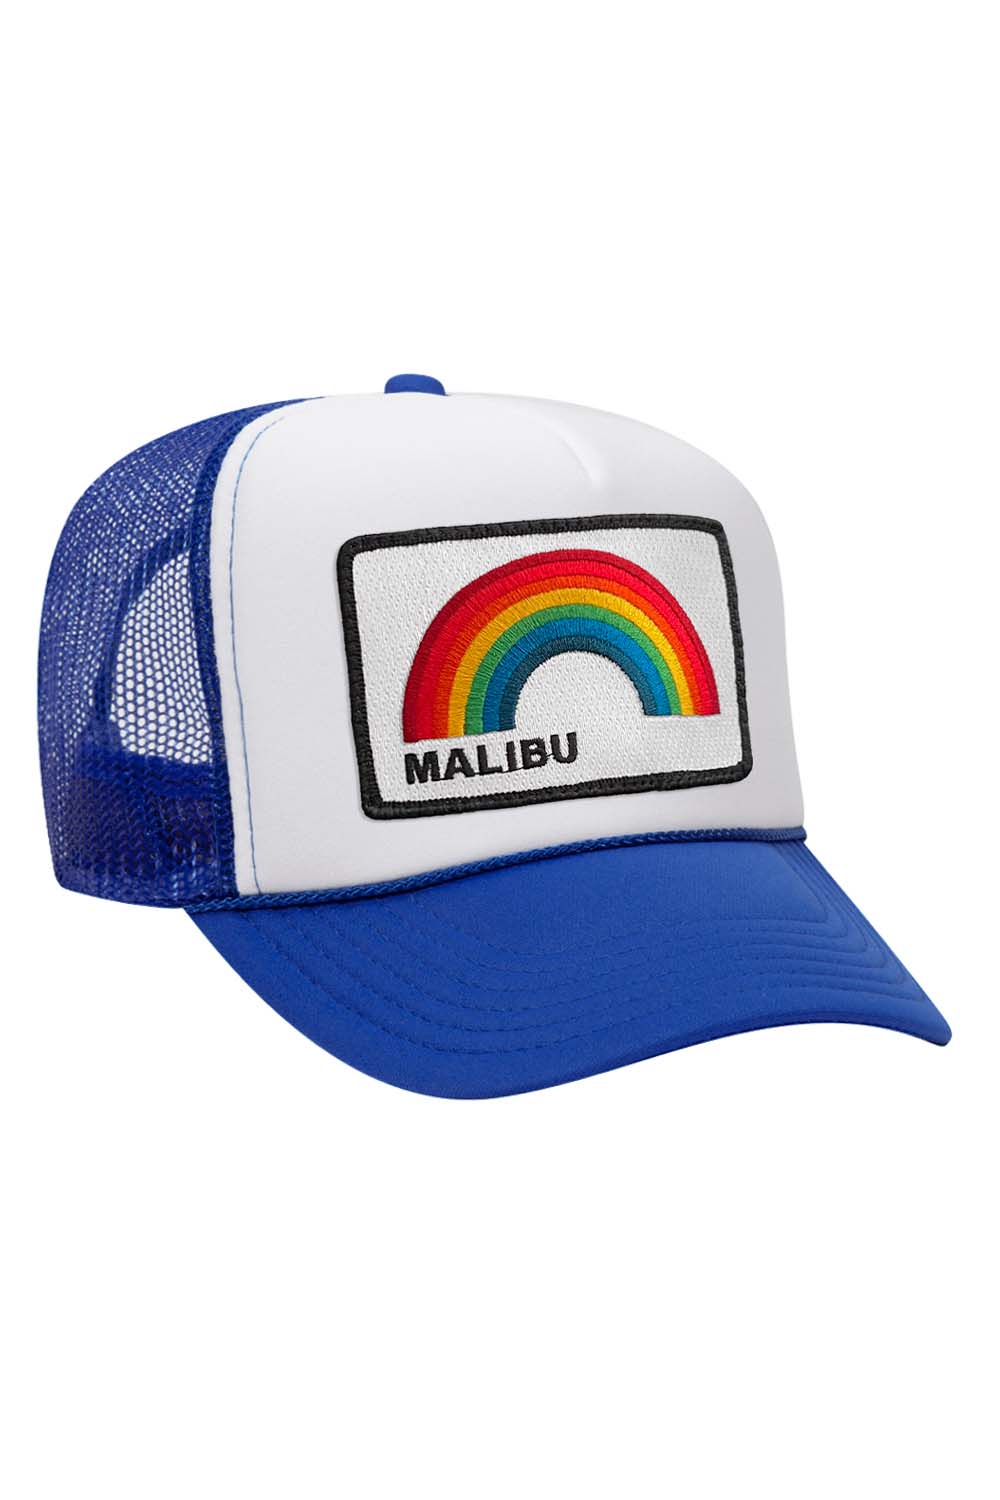 MALIBU RAINBOW TRUCKER HAT HATS Aviator Nation OS ROYAL // WHITE // ROYAL 